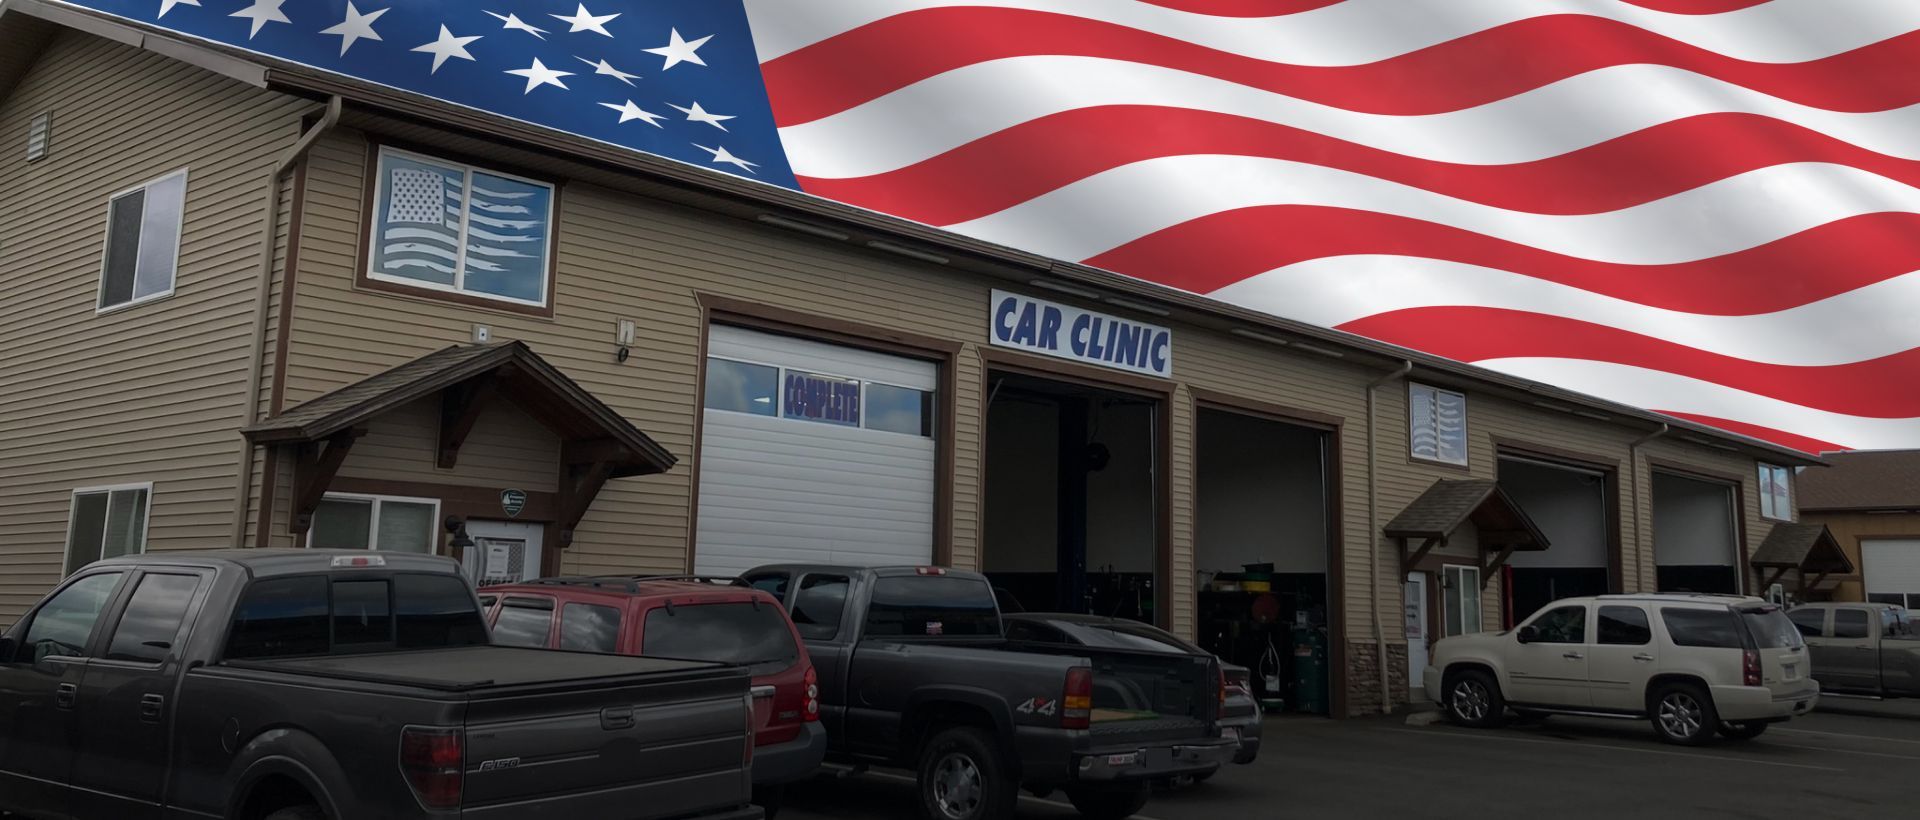 The front of our Hayden Auto Repair Shop | Hayden Car Clinic